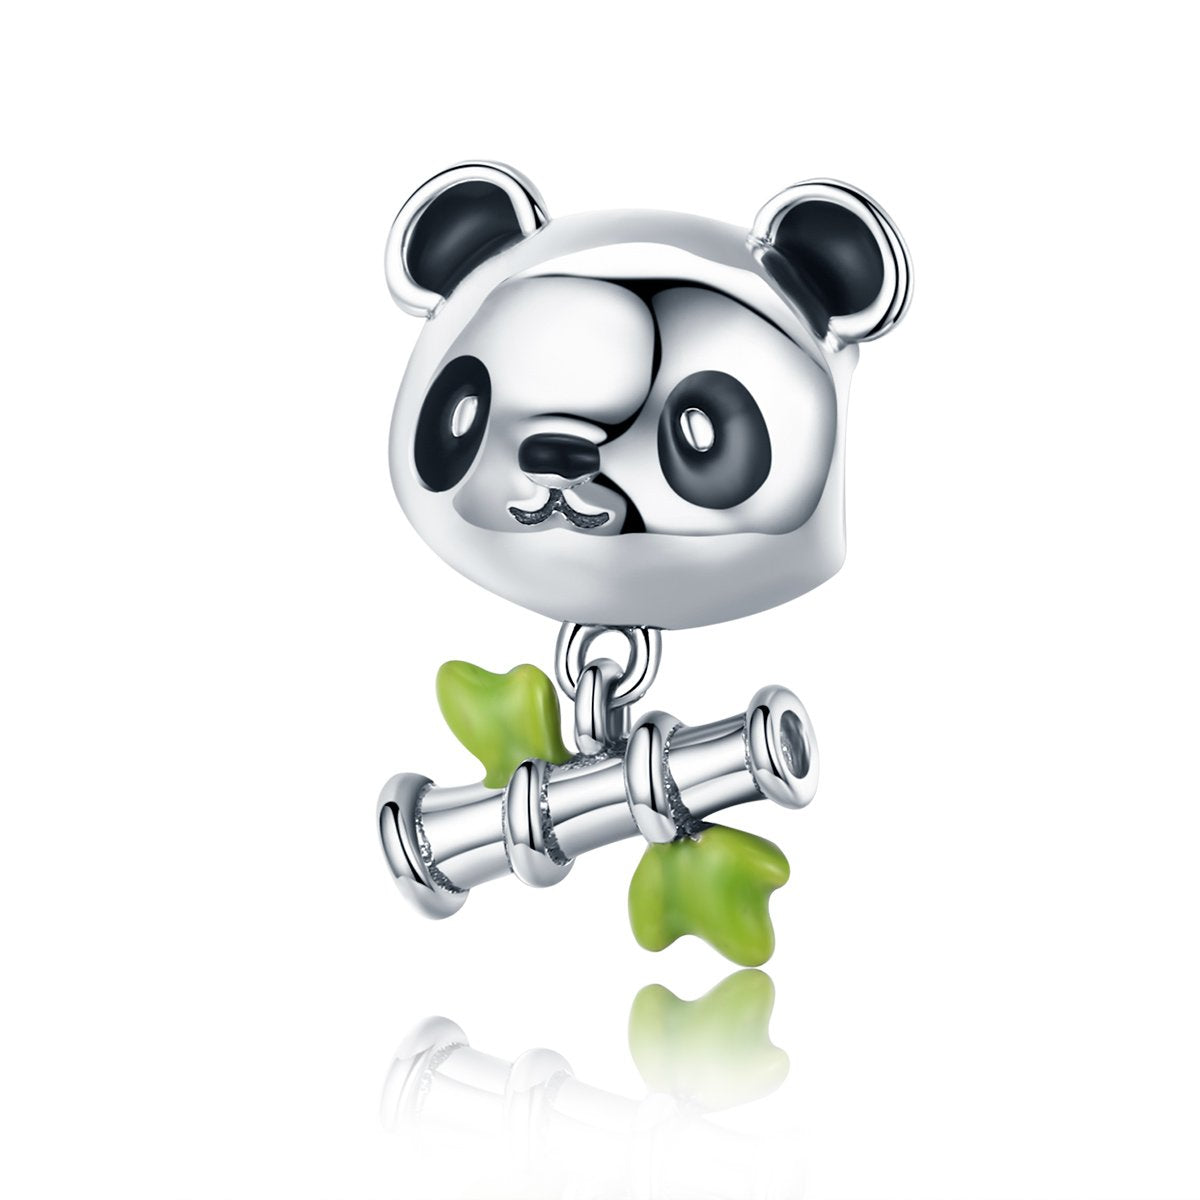 Sterling 925 silver charm the panda n bamboo bead pendant fits Pandora charm and European charm bracelet Xaxe.com